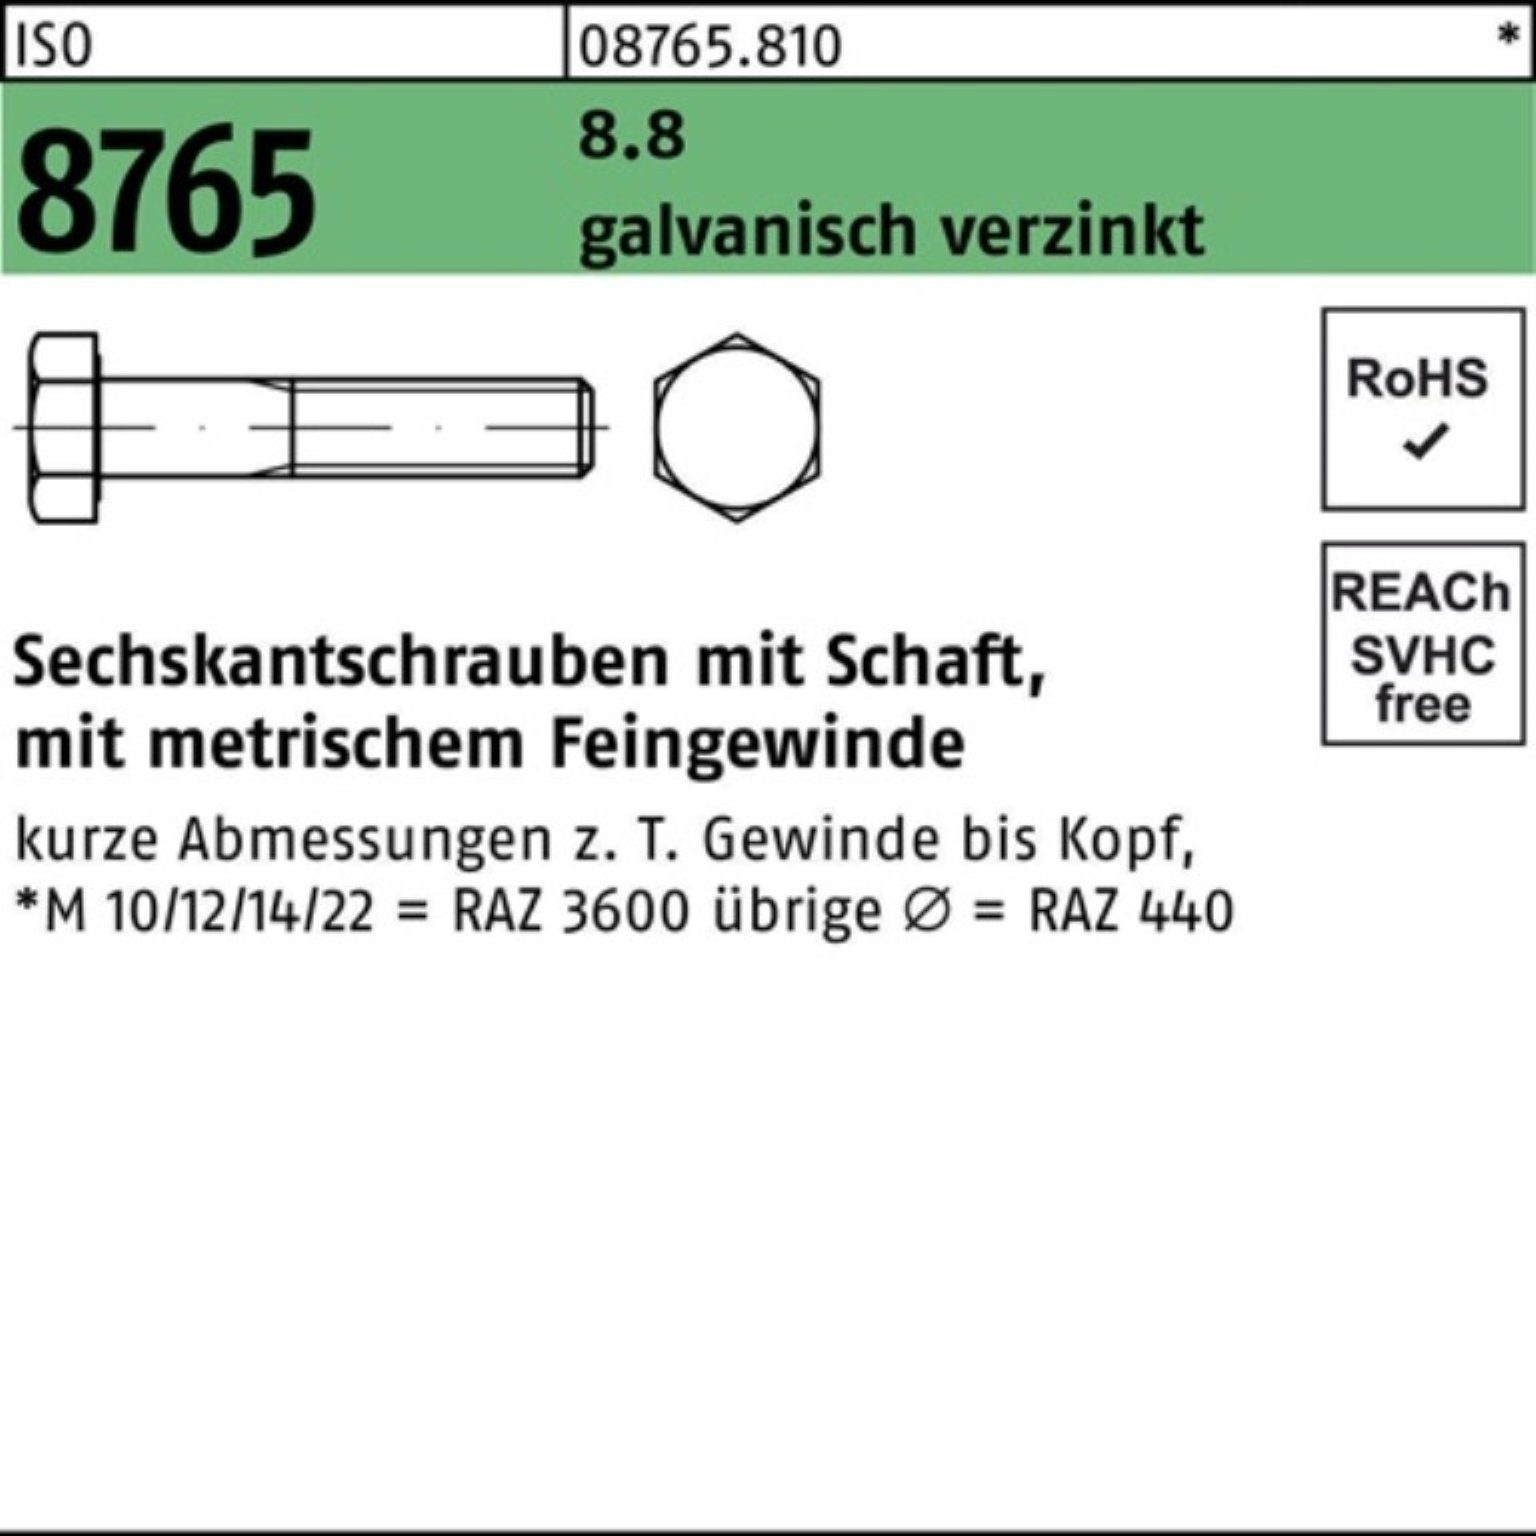 Reyher Sechskantschraube 100er Pack Sechskantschraube 8765 Schaft 8.8 galv.verz ISO M12x1,5x100